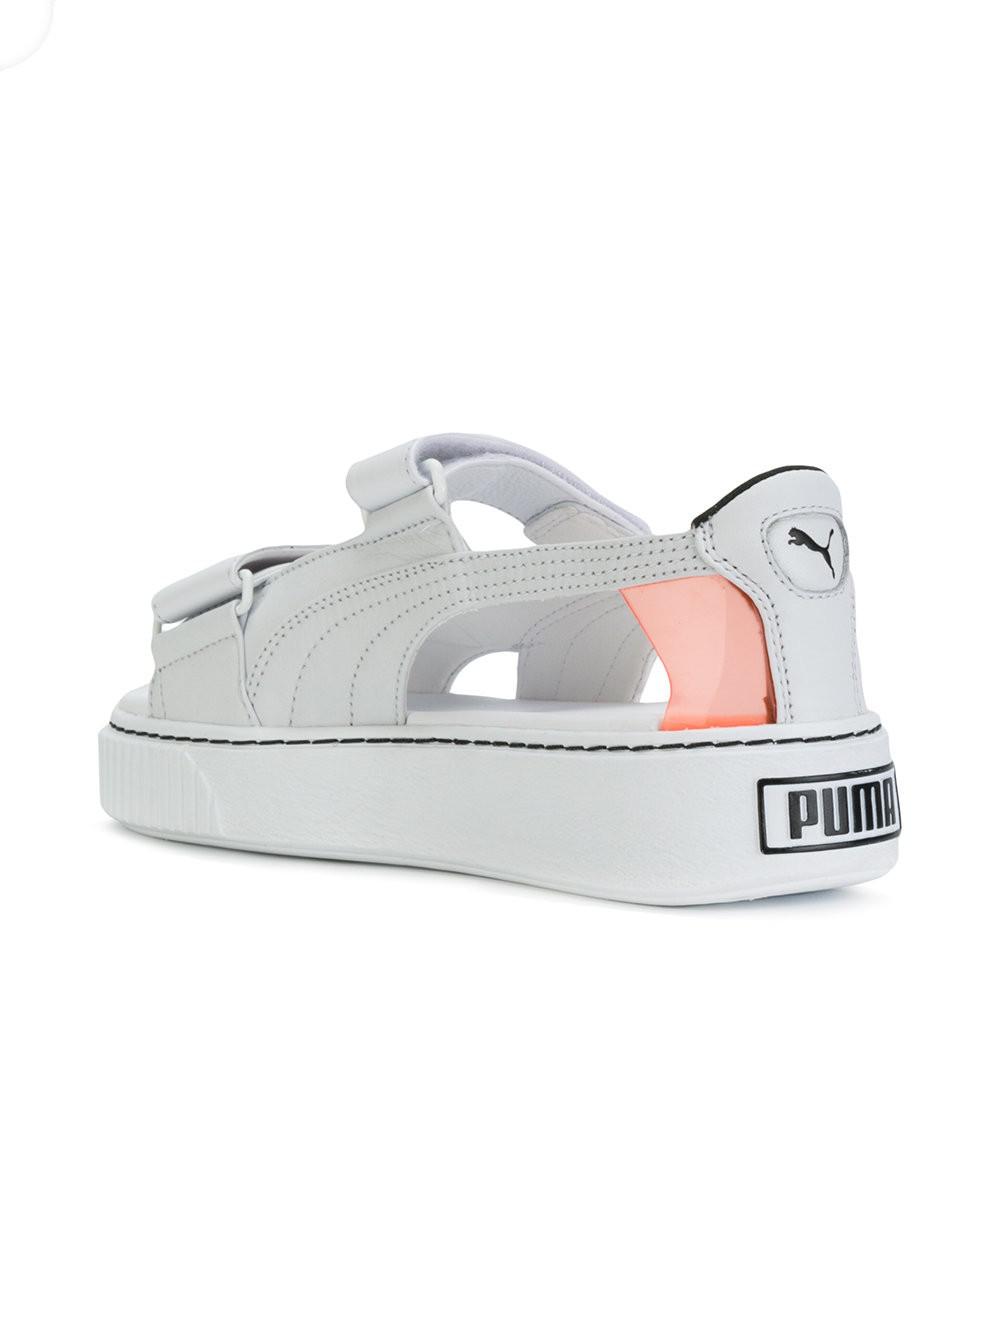 PUMA Cotton Open Toe Strap Sneakers in White - Lyst